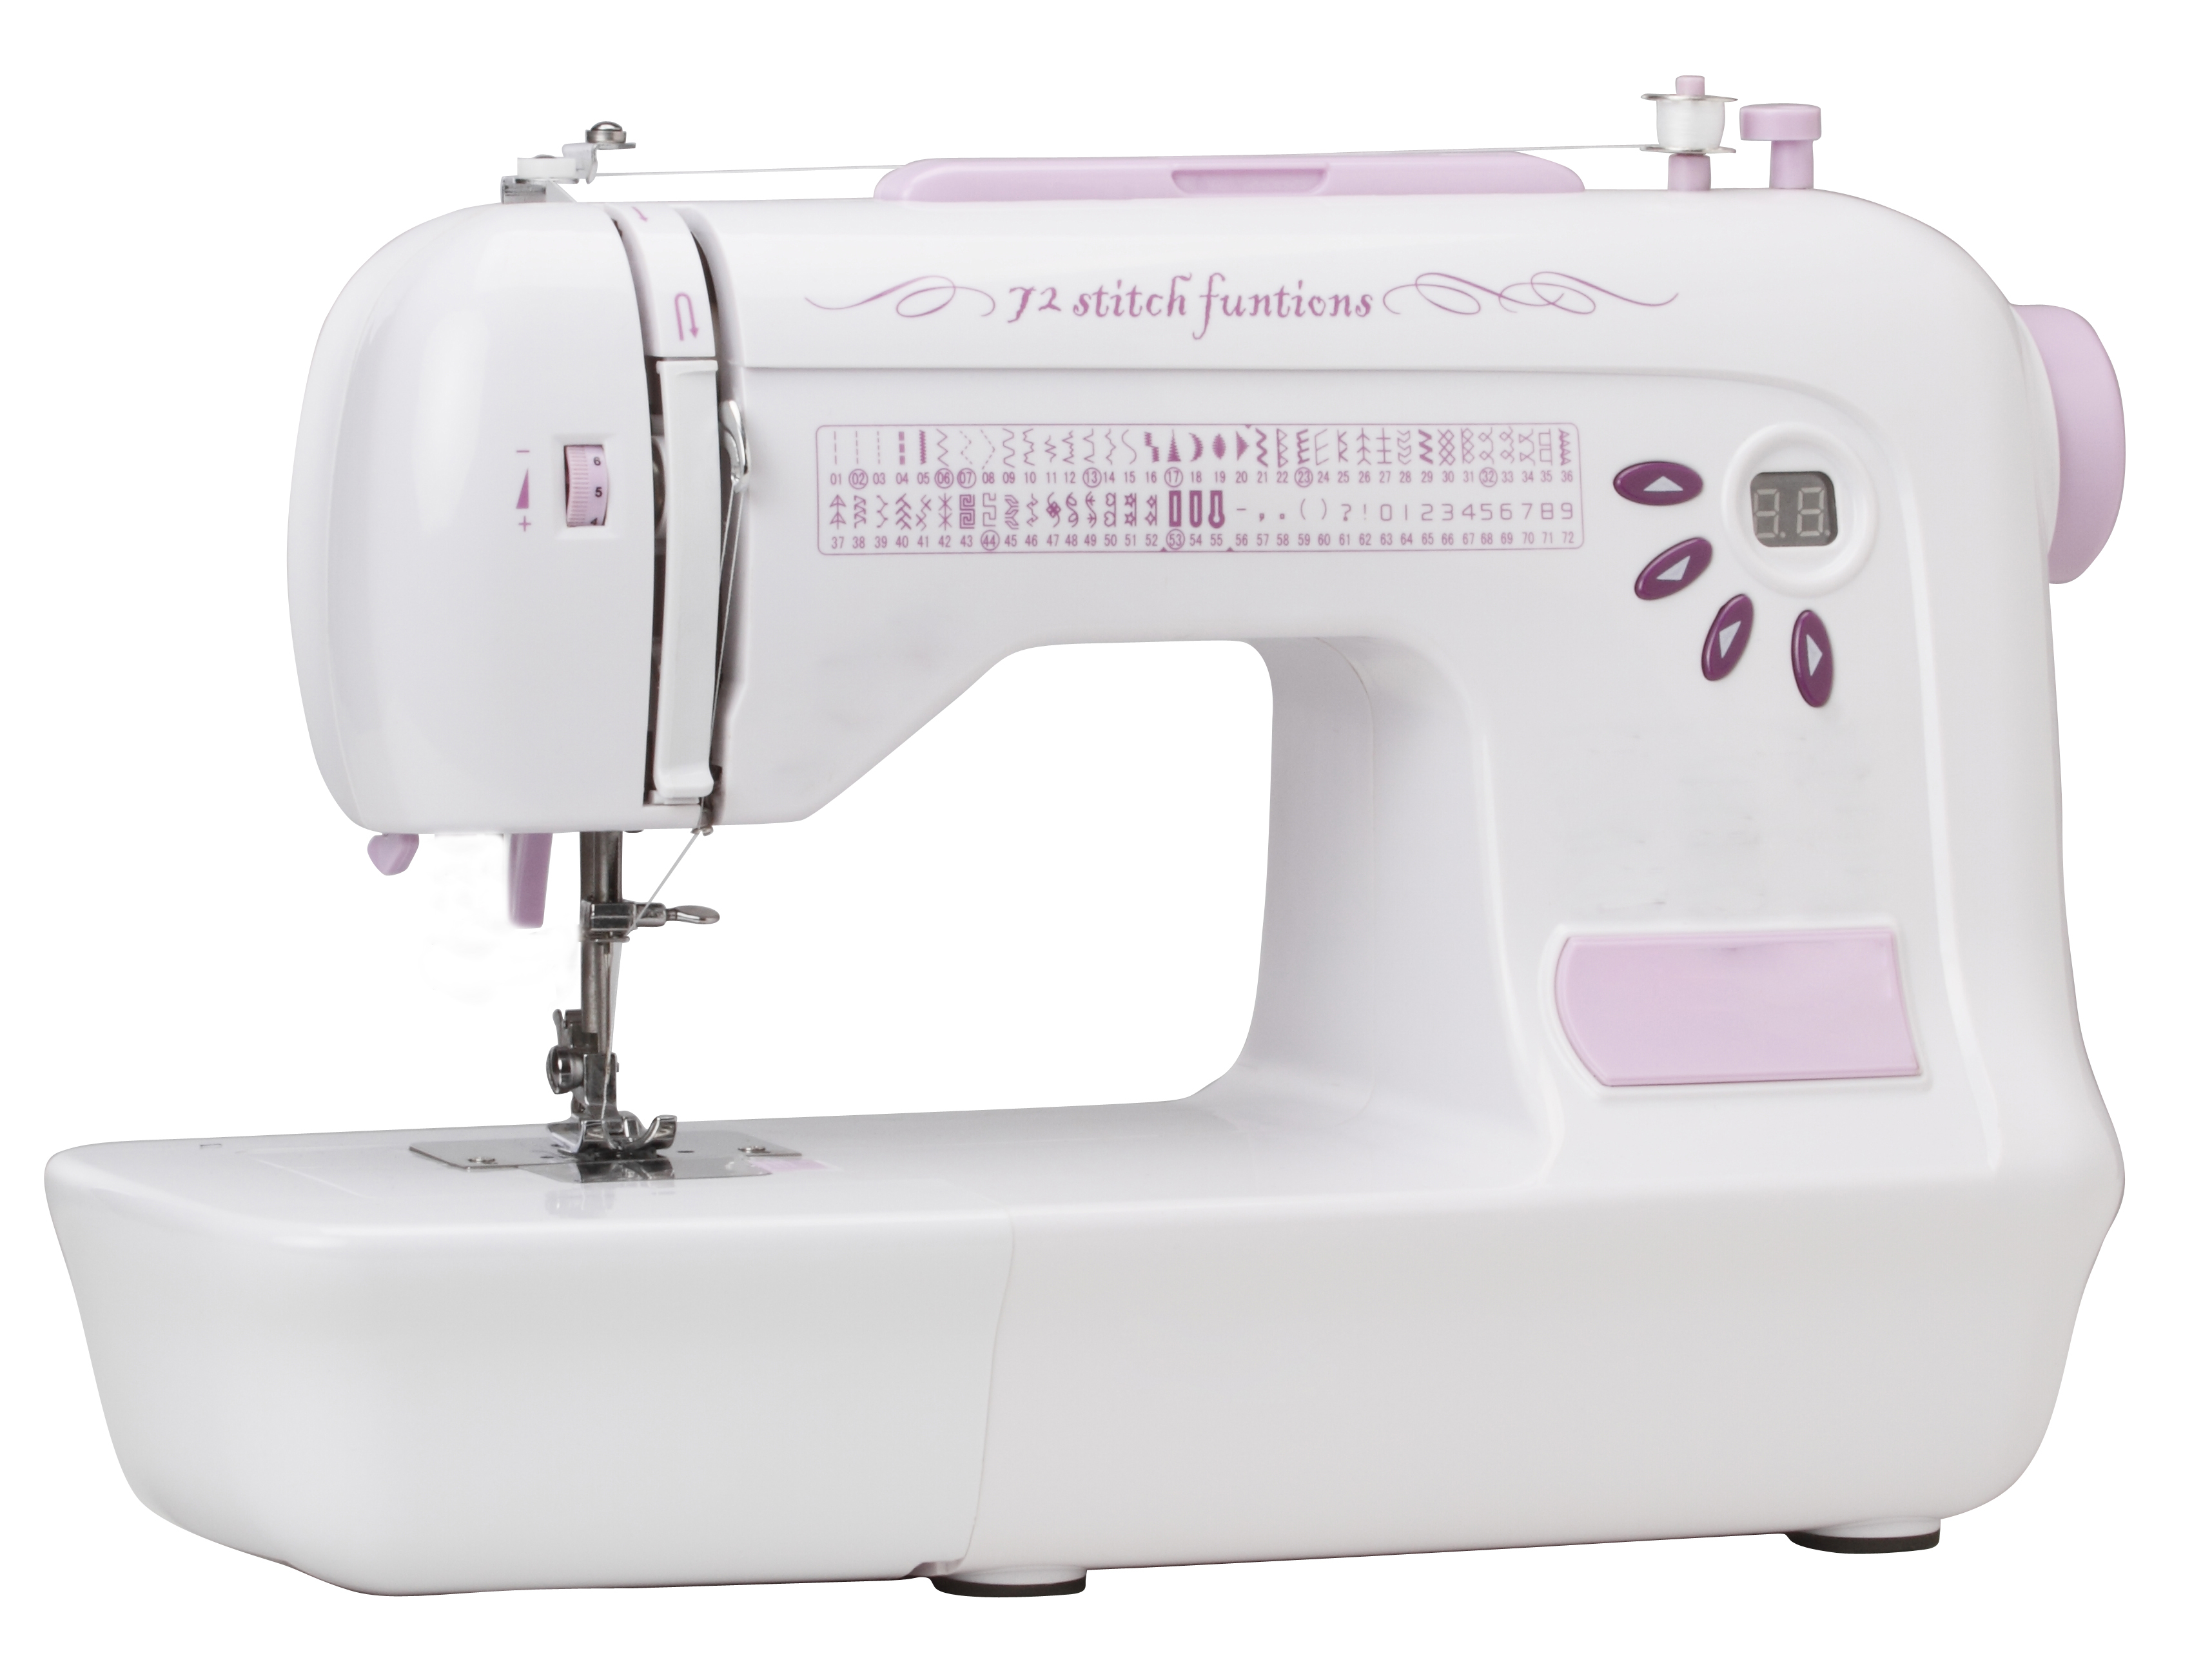 Mulifunctional household sewing machine